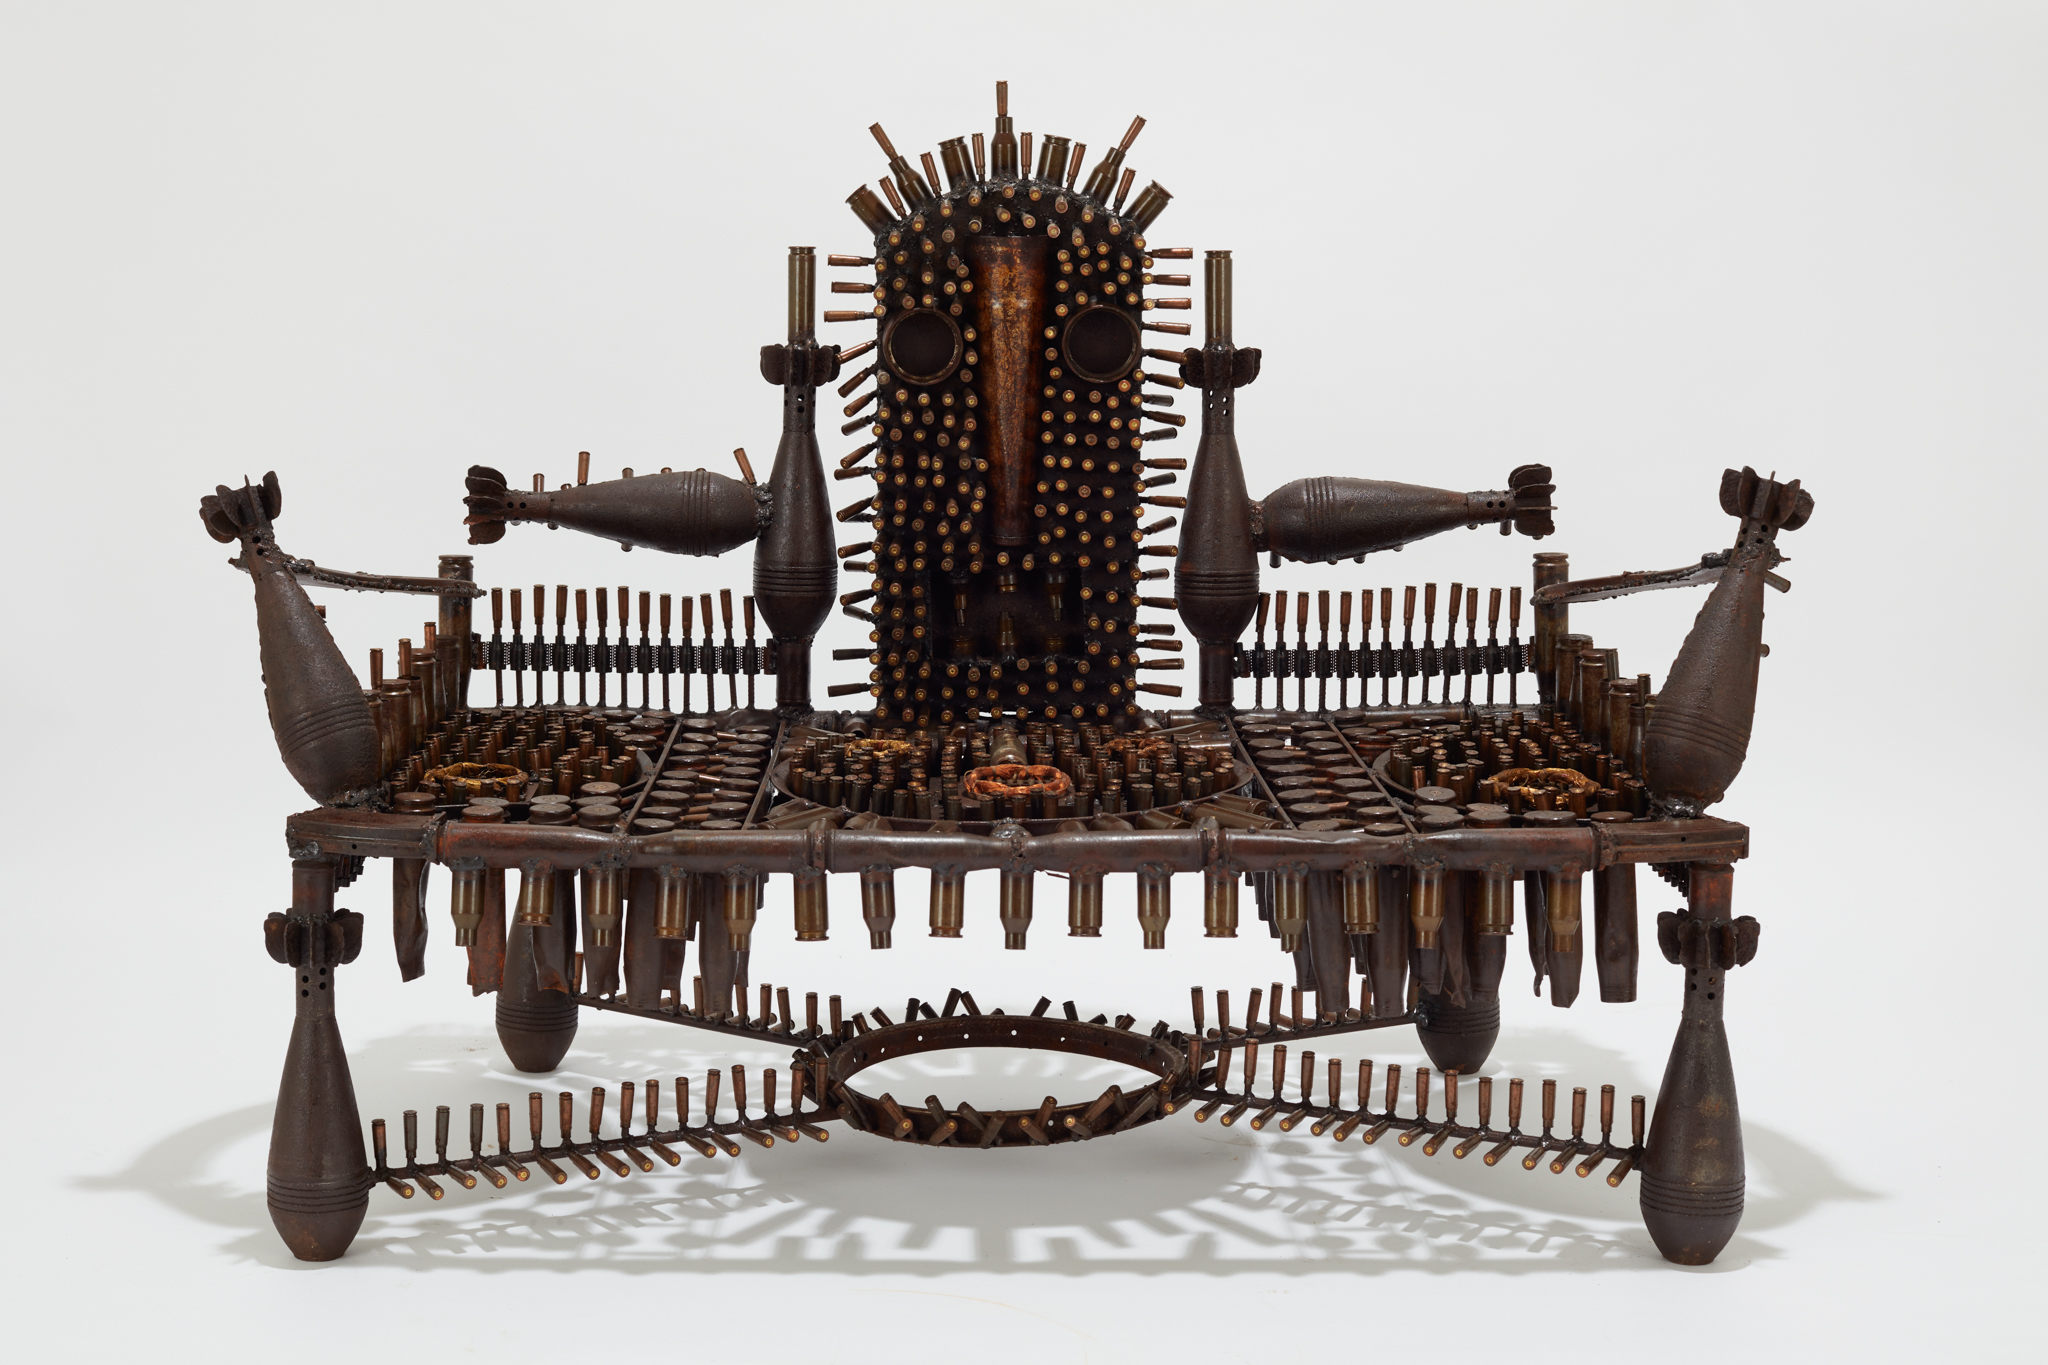 Goncalo Mabunda, Untitled (throne), 2019, Courtesy of Jack Bell Gallery